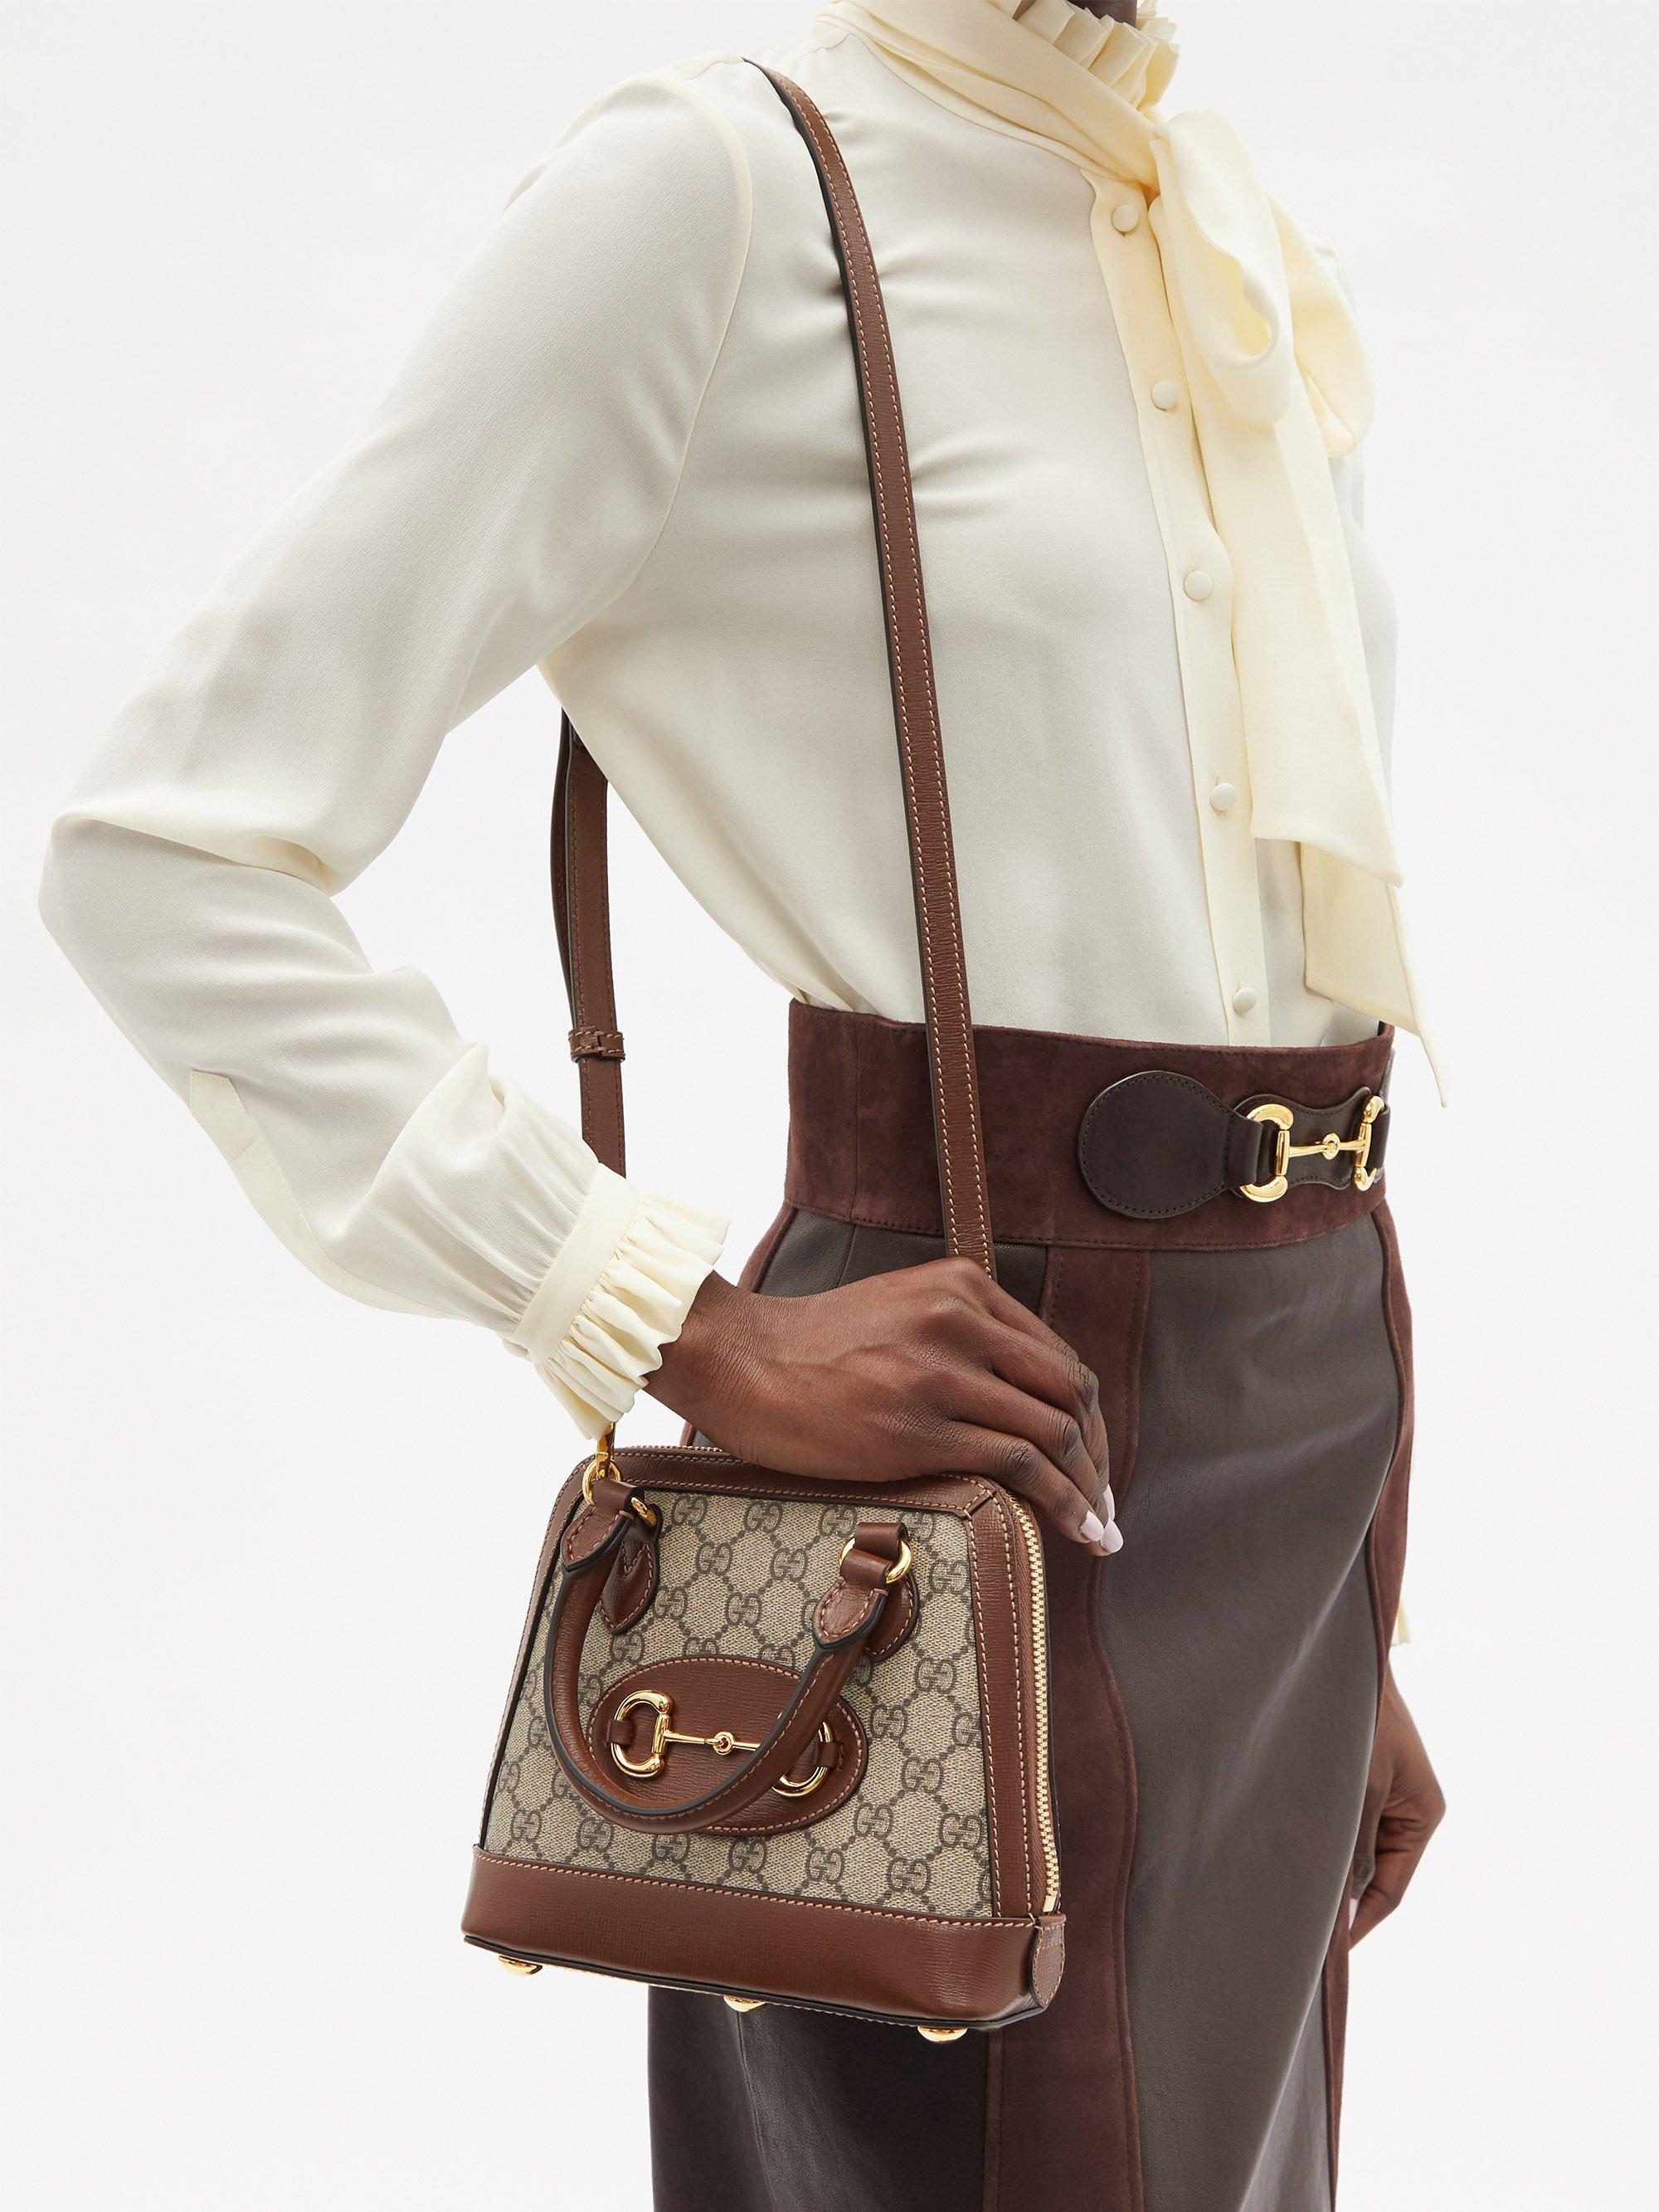 GUCCI 1955 HORSEBIT shoulder bag GG Supreme brown #purseblog #purseforum